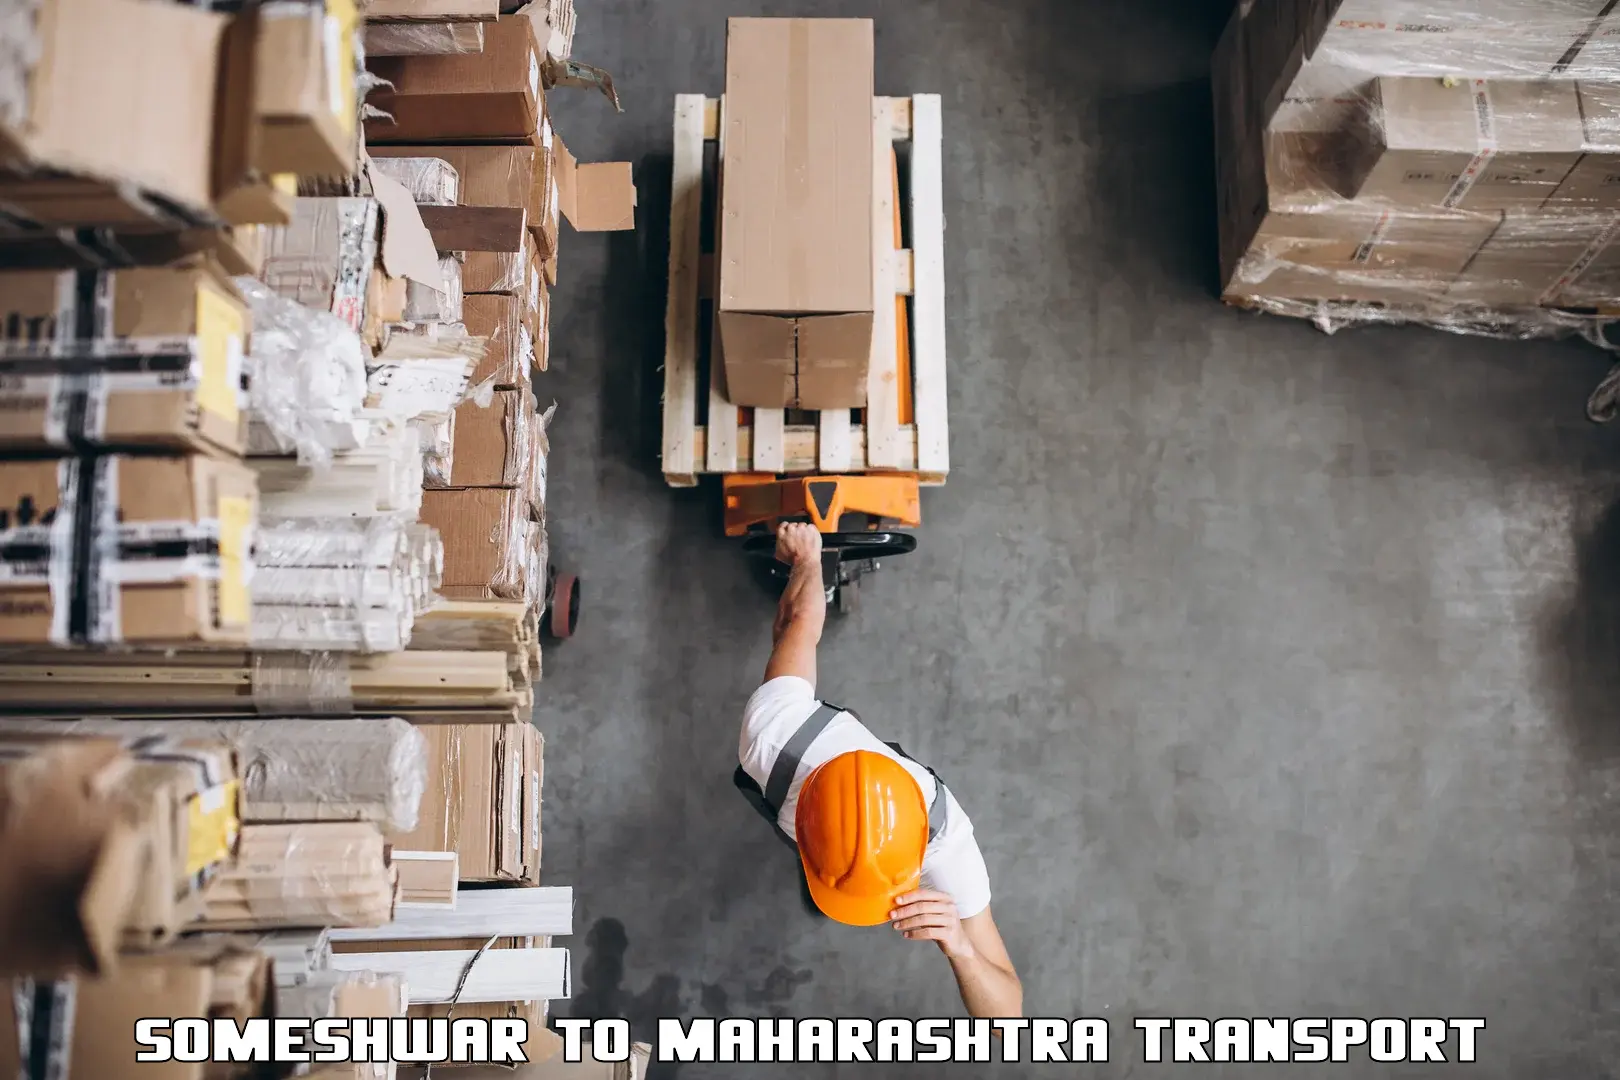 Goods delivery service Someshwar to Maharashtra